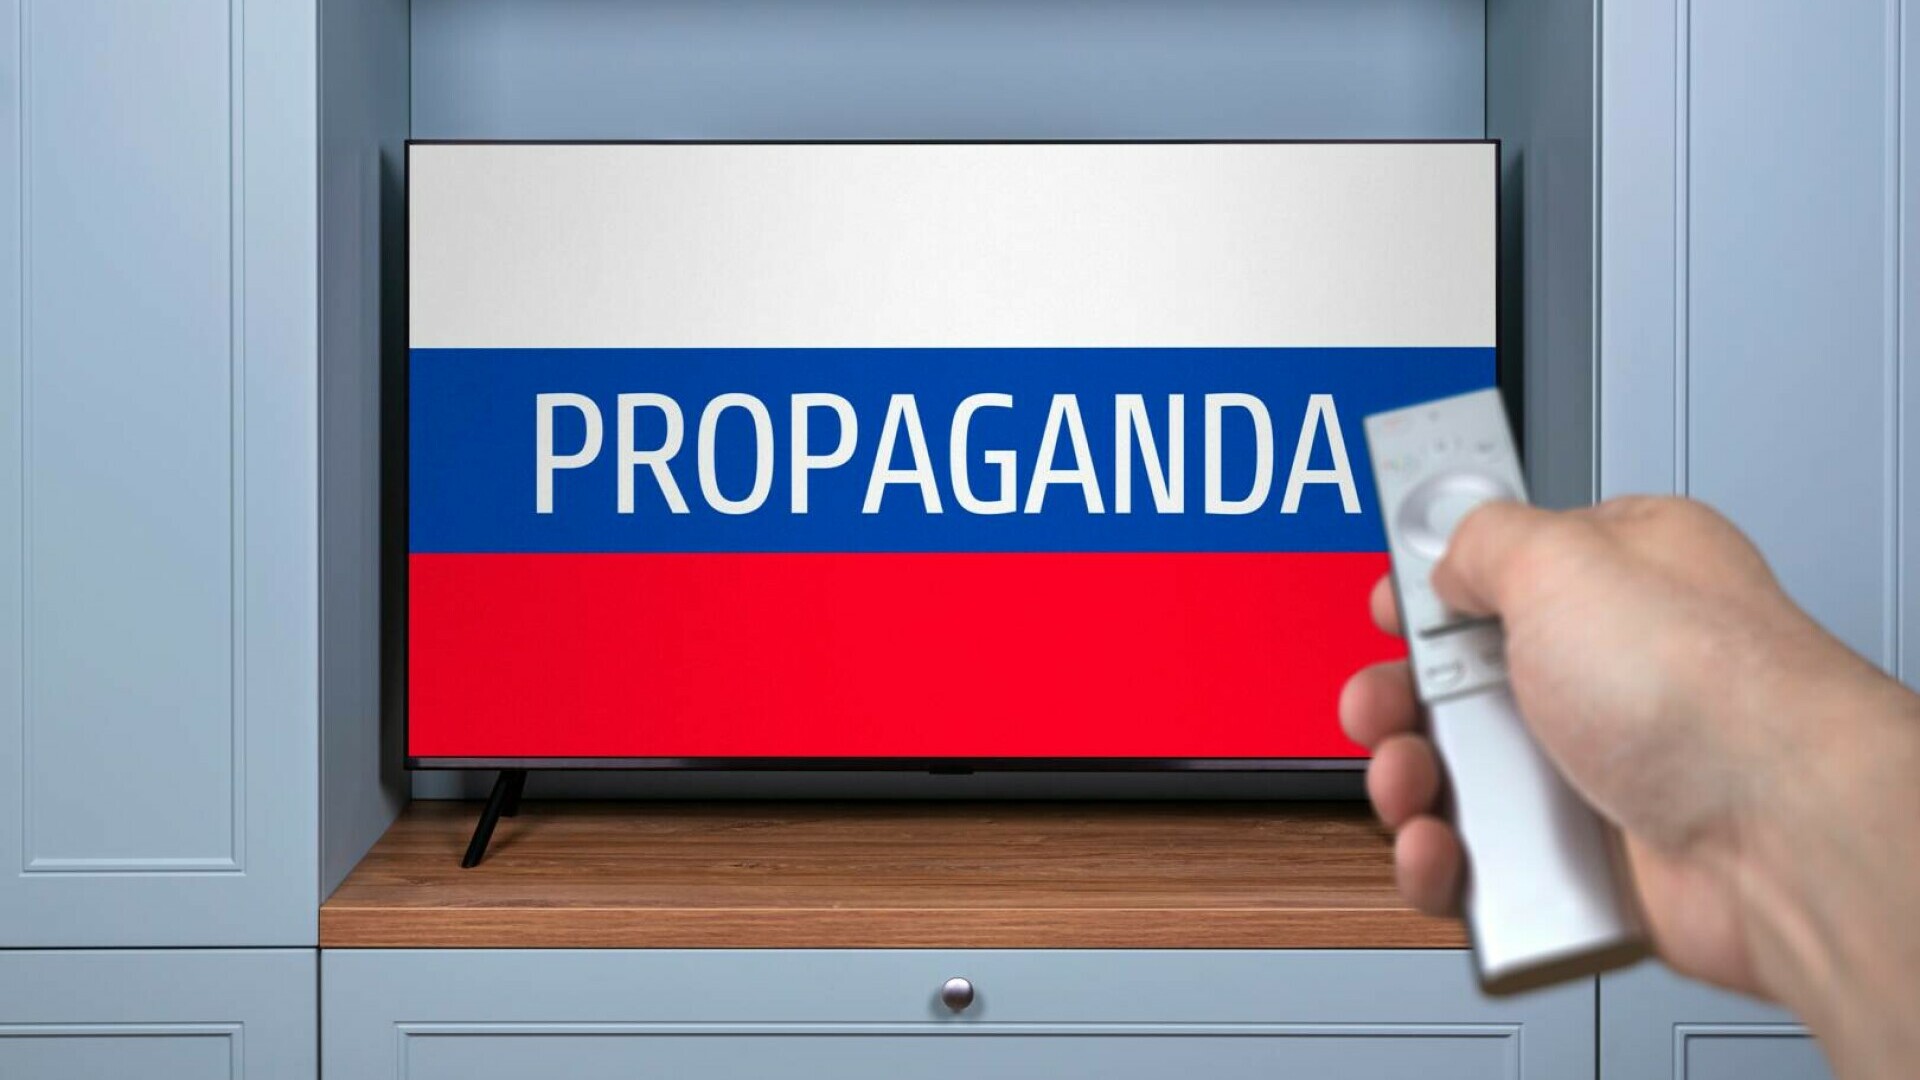 propaganda rusa